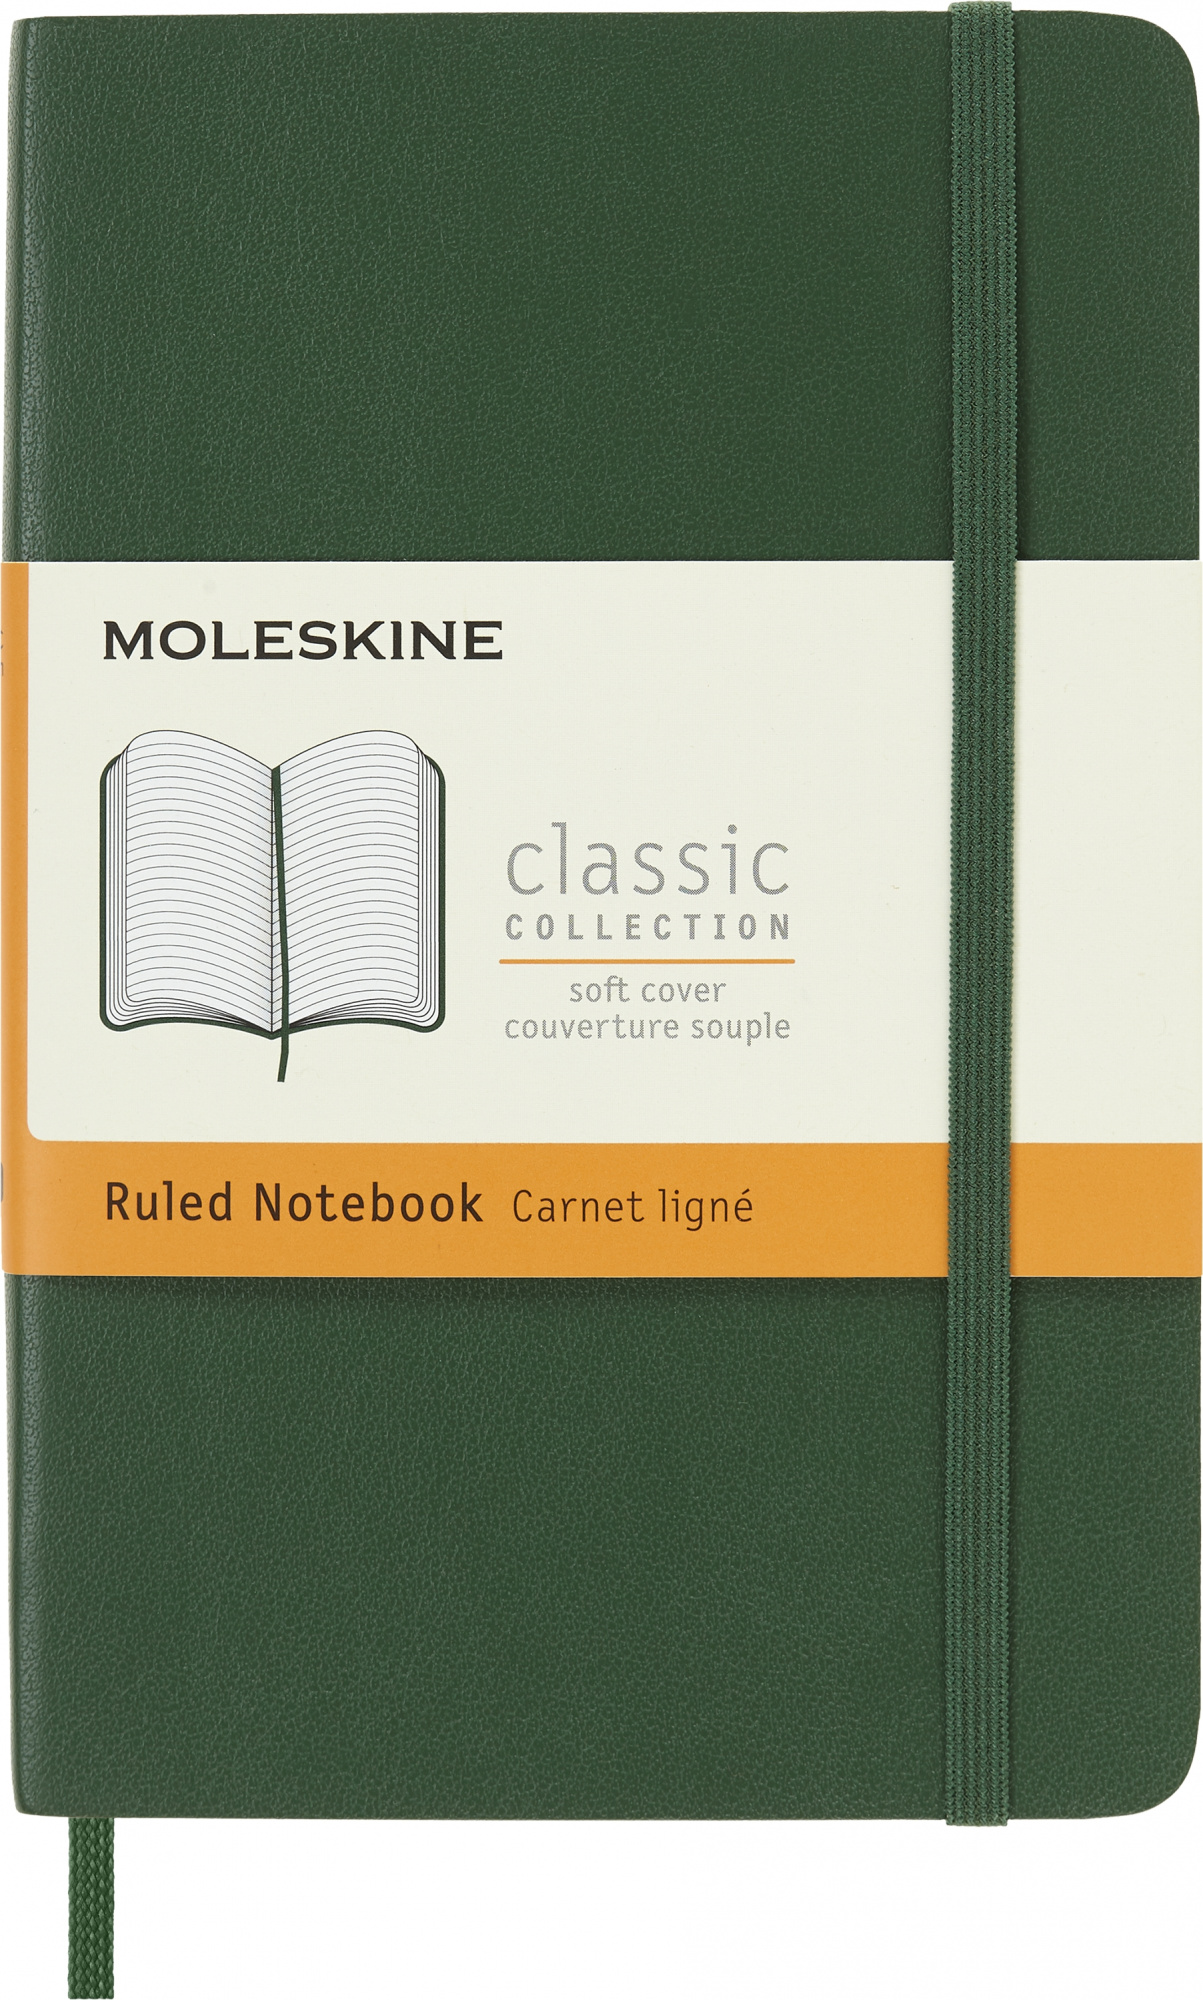 Блокнот Moleskine CLASSIC SOFT QP611K15 Pocket 90x140мм 192стр. линейка мягкая обложка зеленый